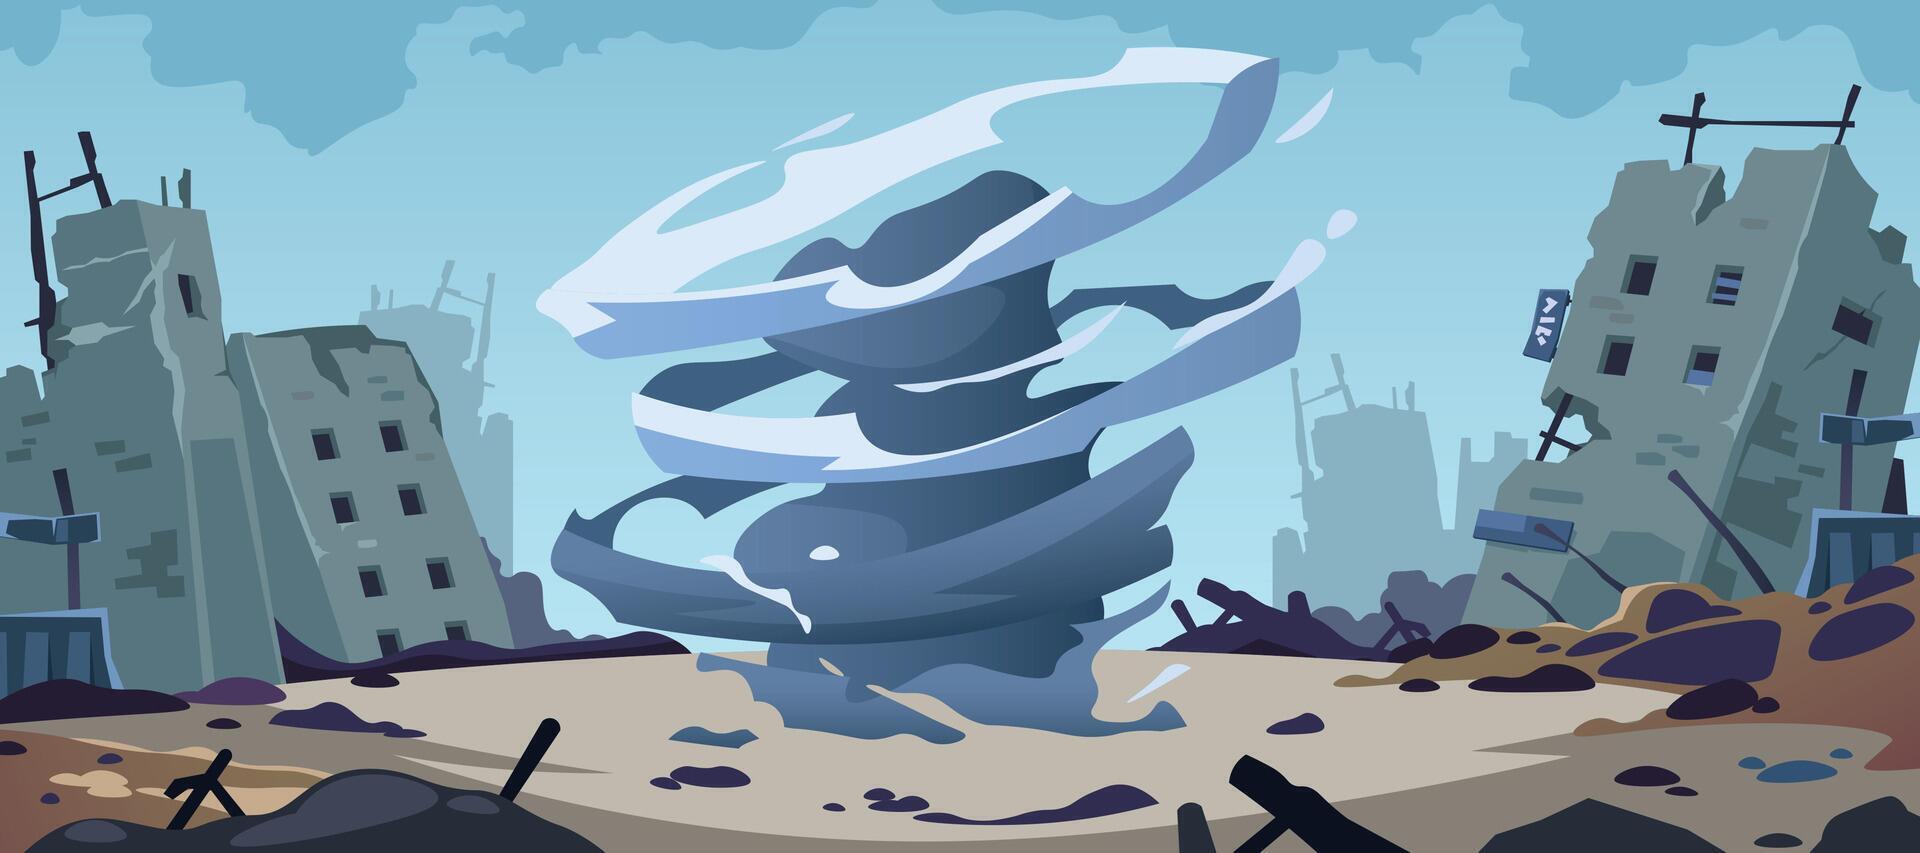 tornado catástrofe antecedentes. dibujos animados huracán tormenta de viento destrucción, edificios demolido por ciclón, tornado Tormentoso desastre concepto. vector ilustración